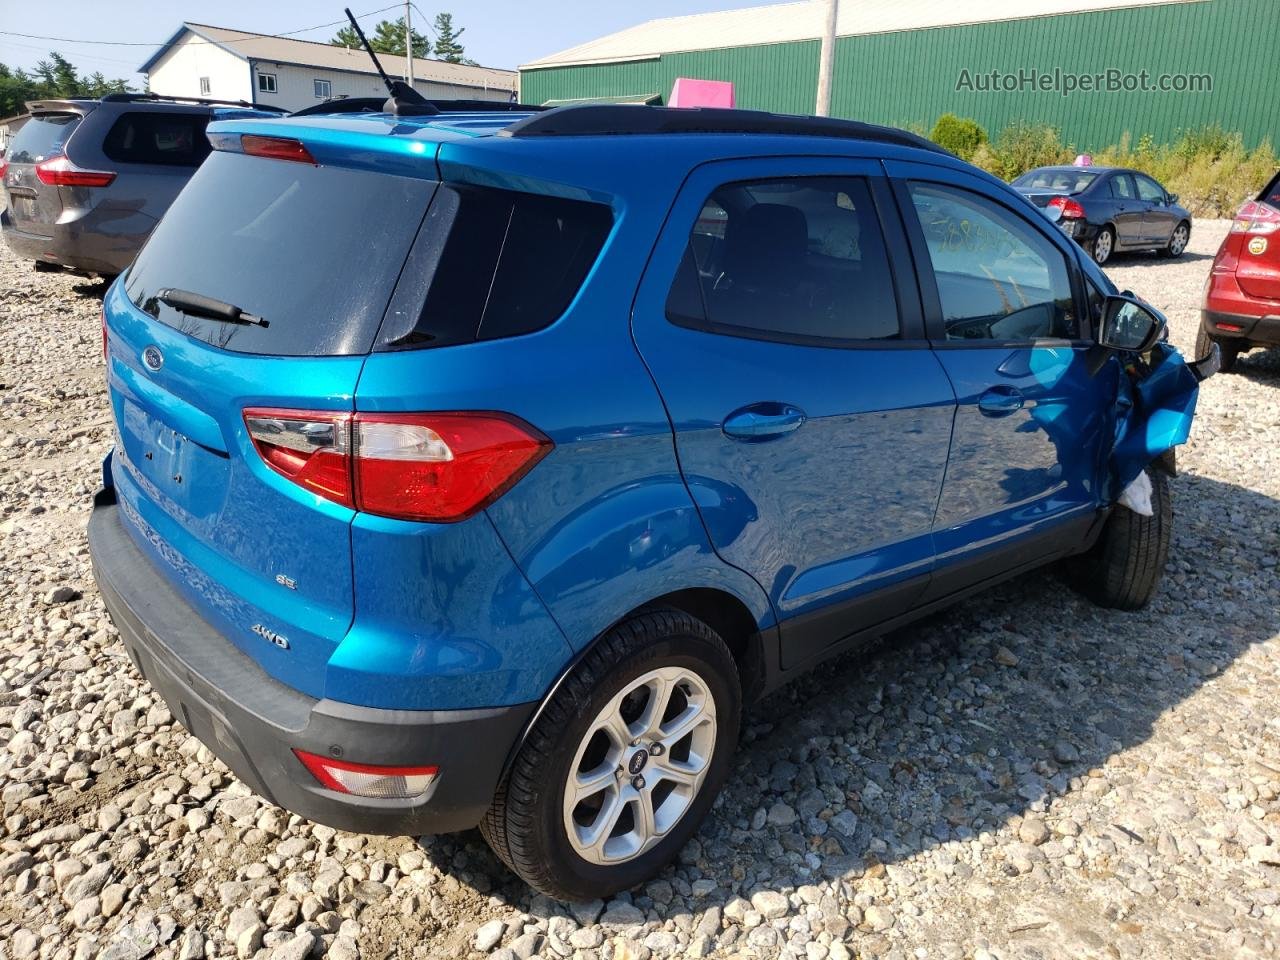 2019 Ford Ecosport Se Blue vin: MAJ6S3GL6KC279998